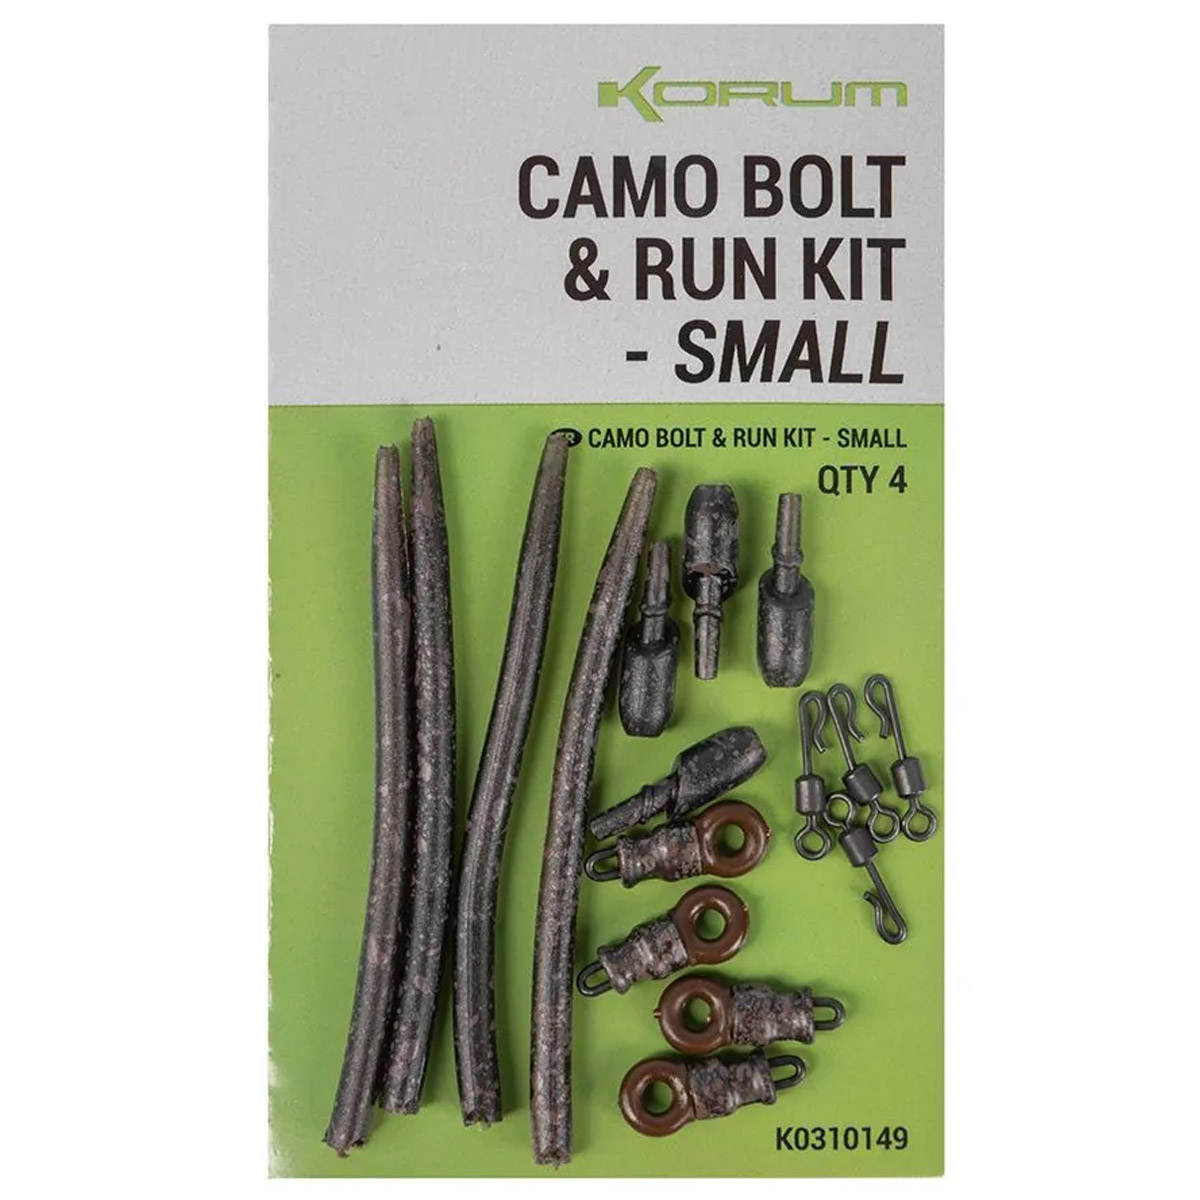 Korum Camo Bolt & Run Kit Small